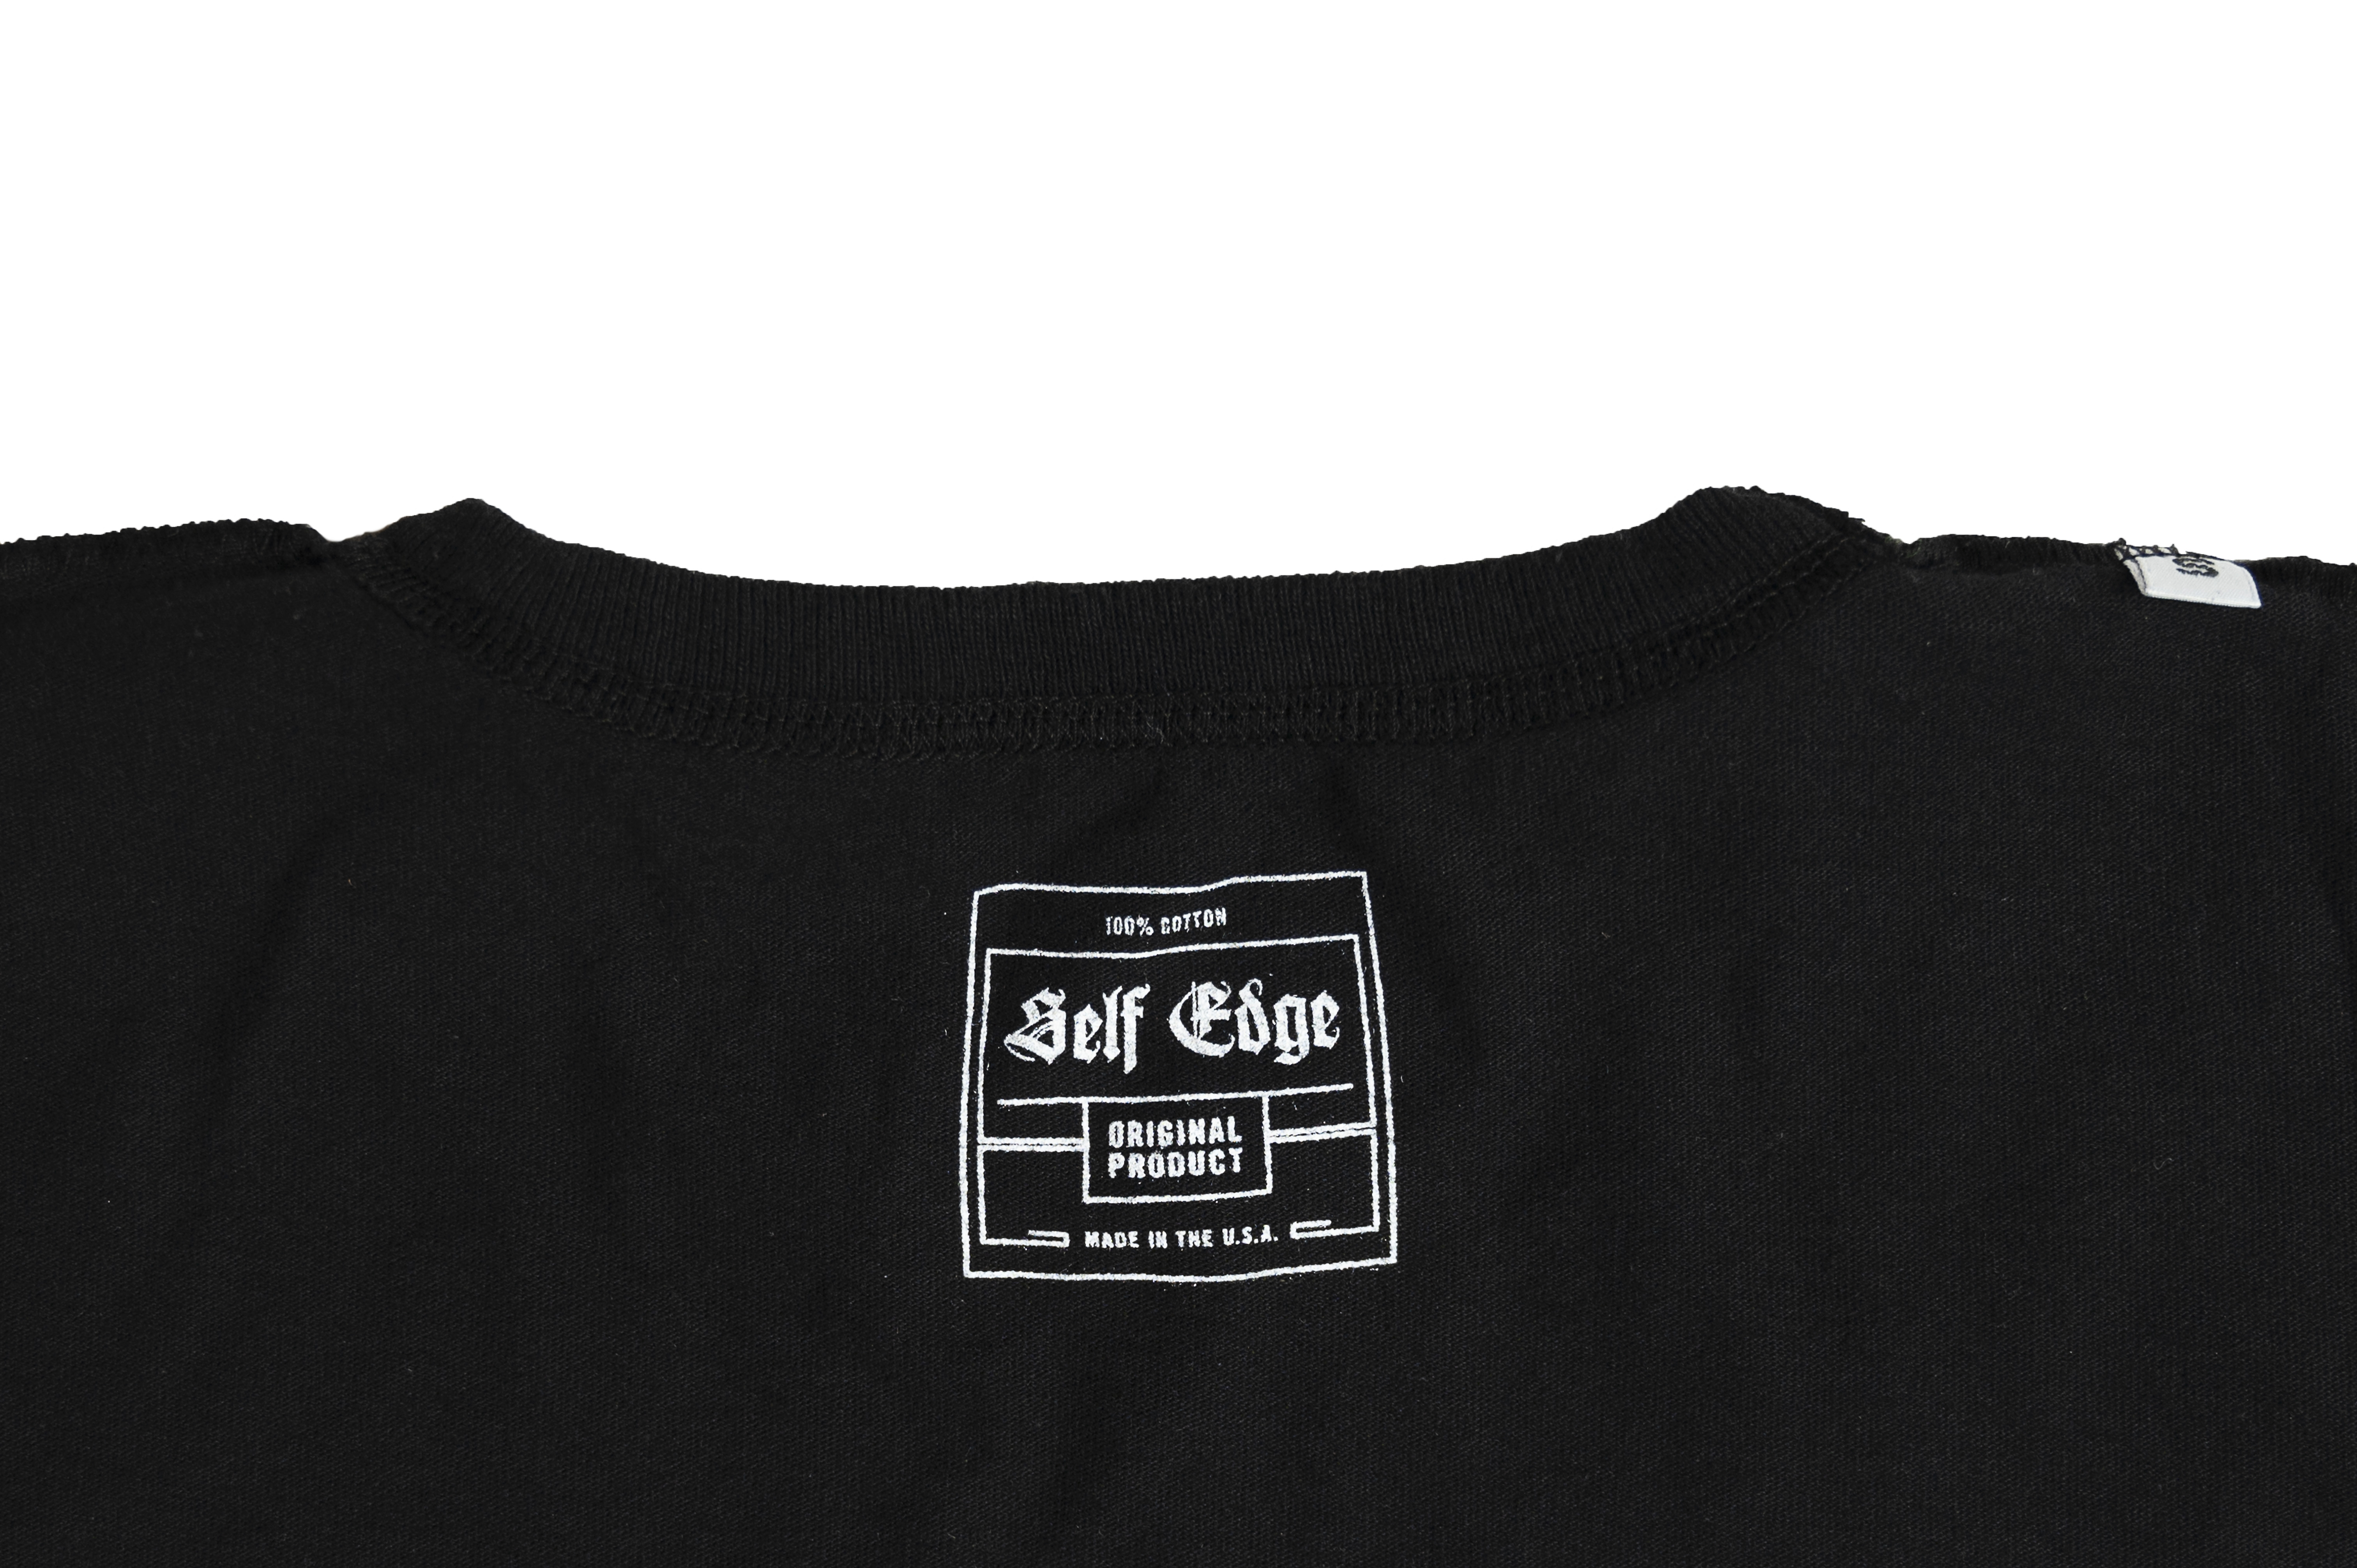 Self Edge Graphic Series T-Shirt #16 - Eight Locked Dimensions